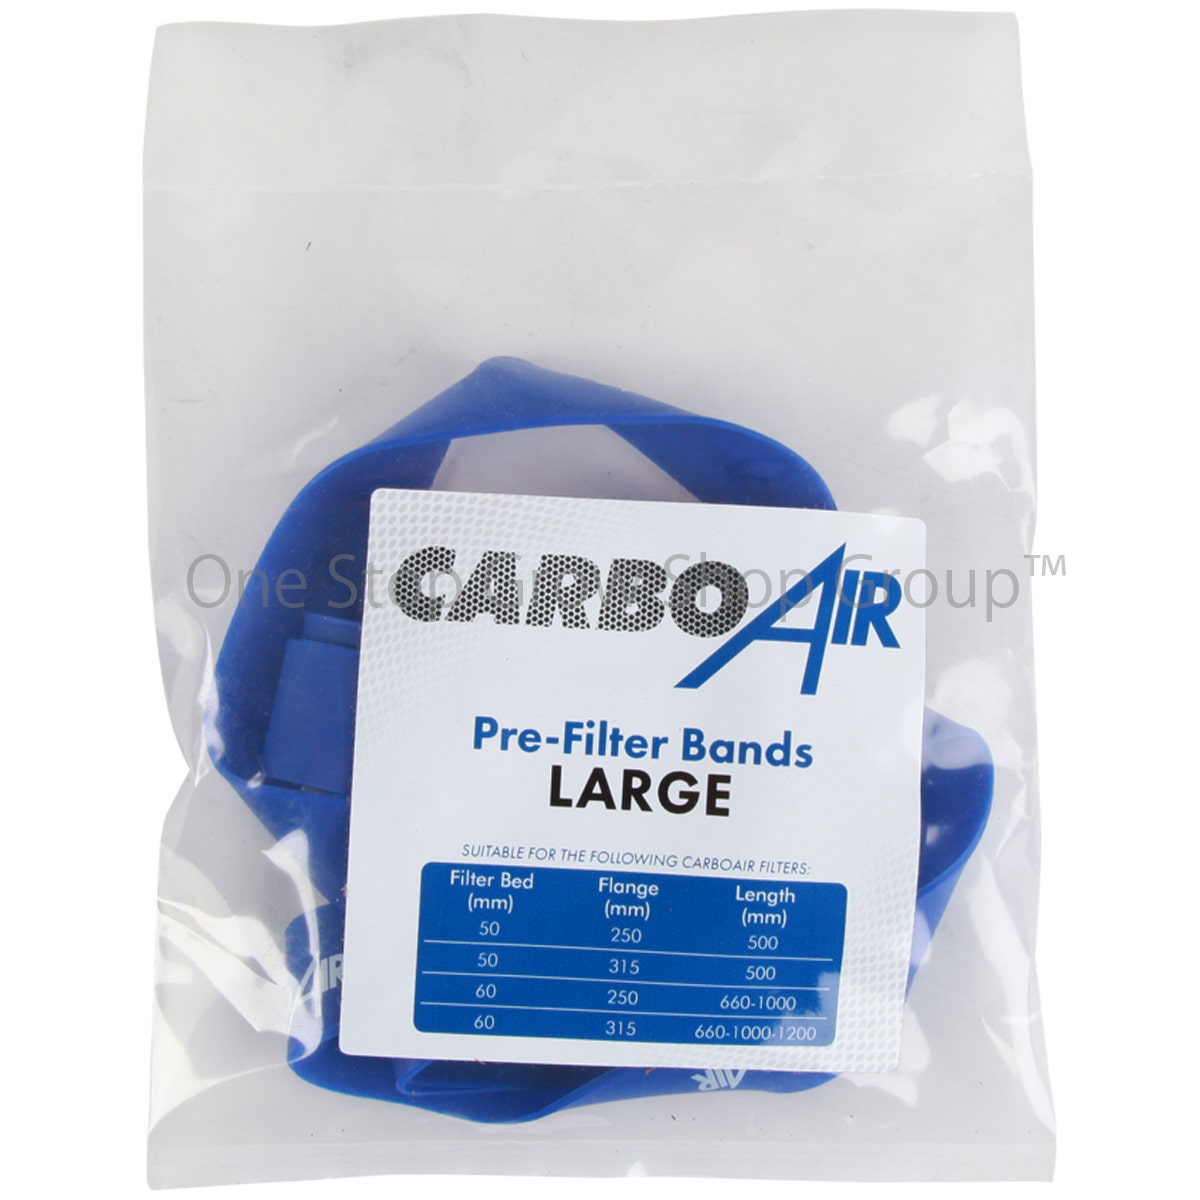 CarboAir Pre-Filter Bands